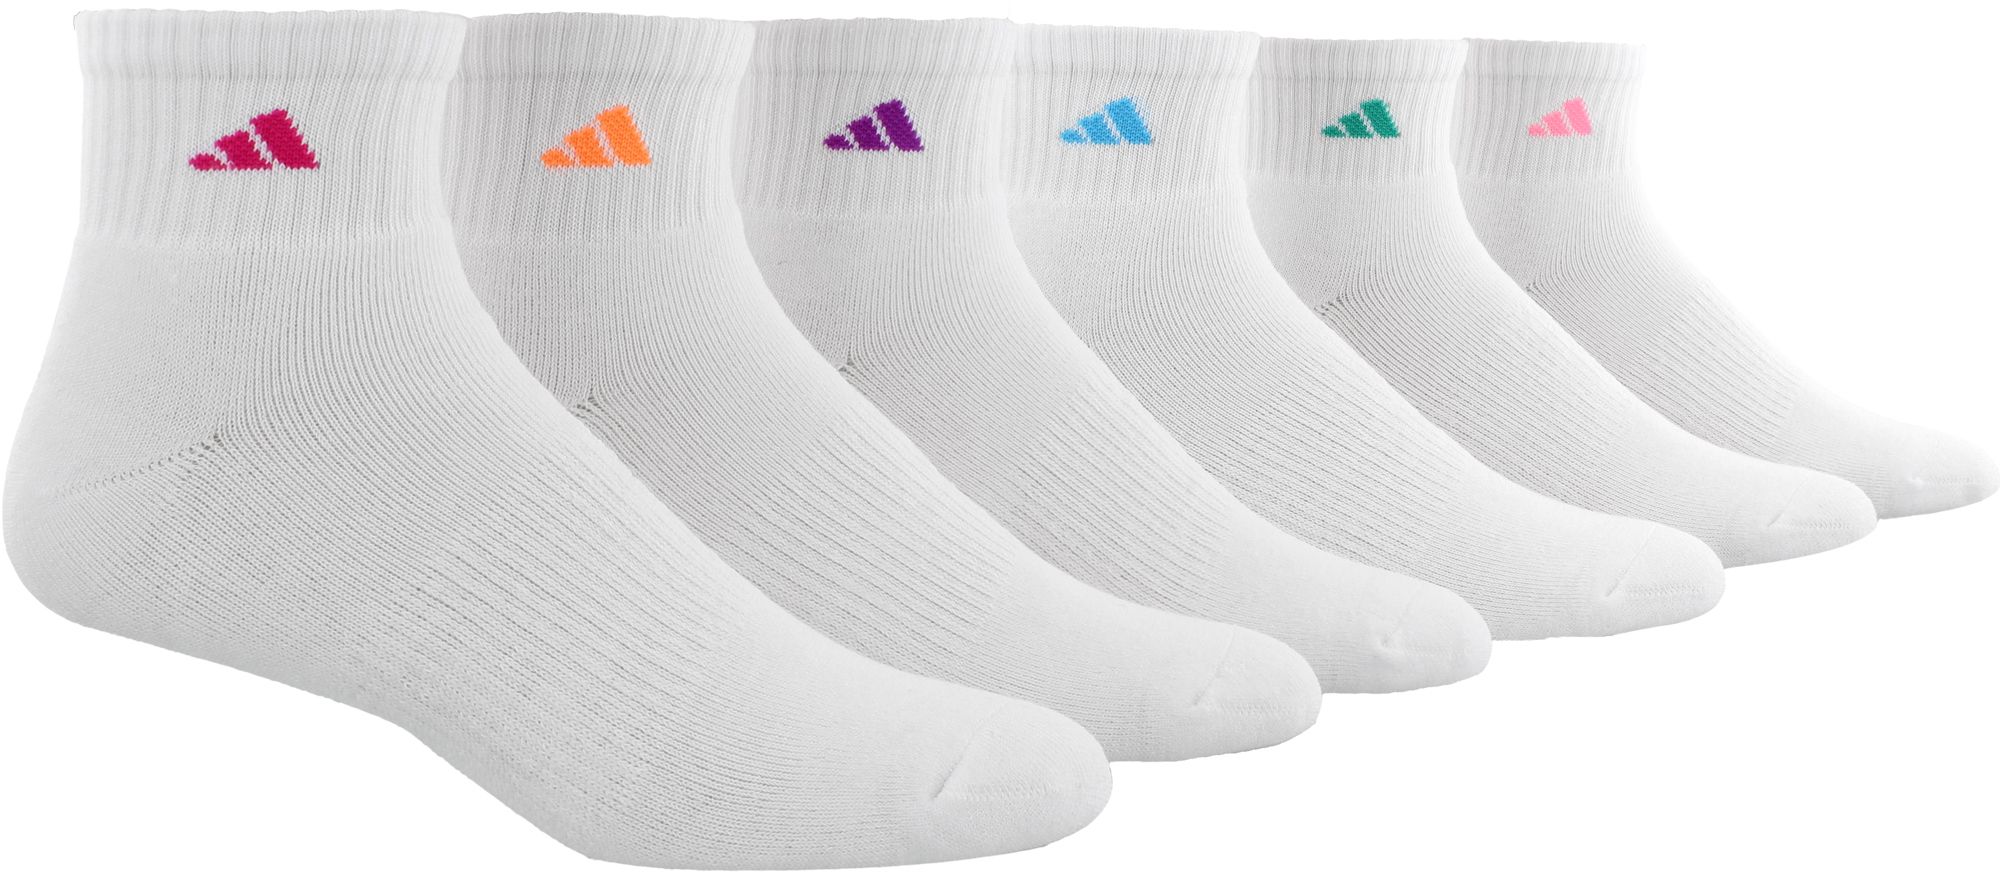 adidas women's 6 pack crew socks